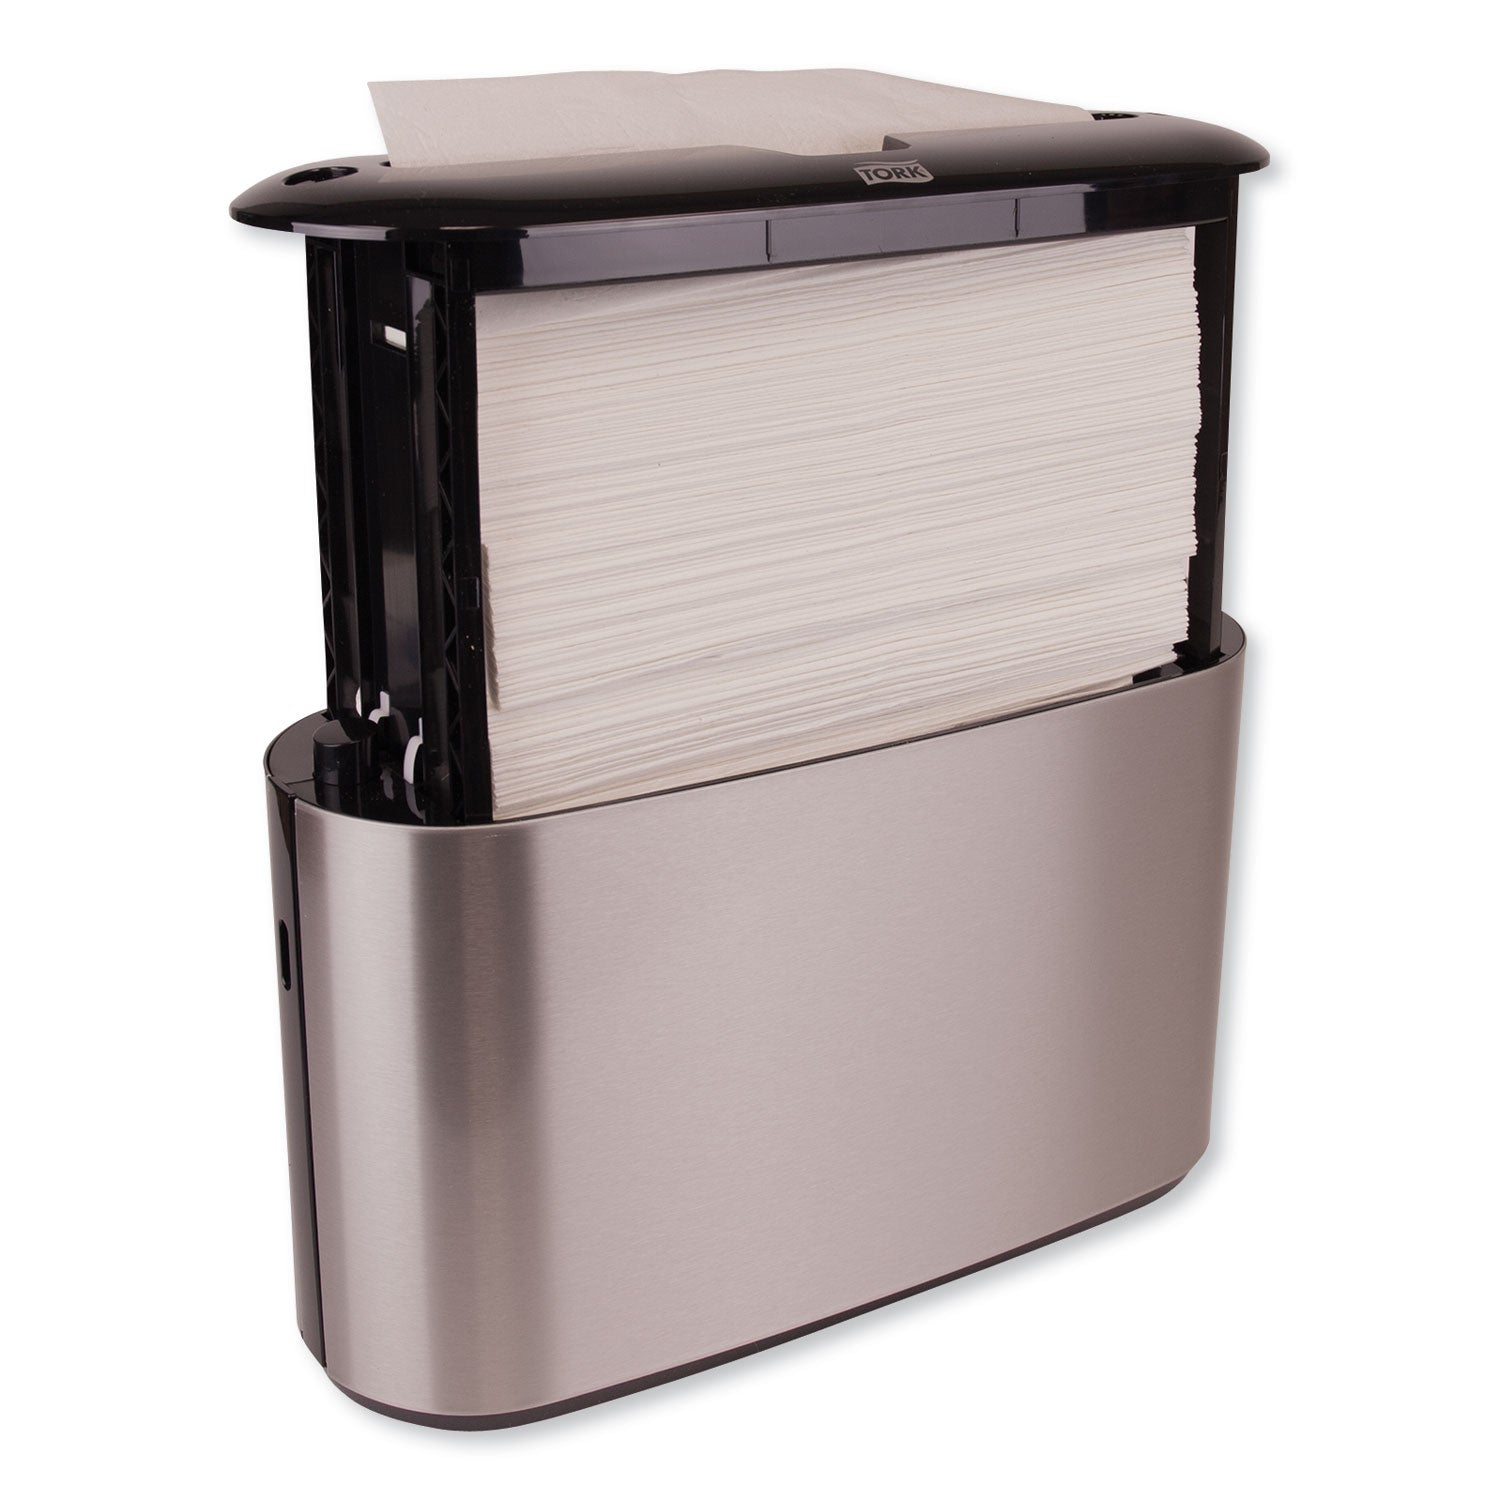 xpress-countertop-towel-dispenser-1268-x-456-x-792-stainless-steel-black_trk302030 - 4